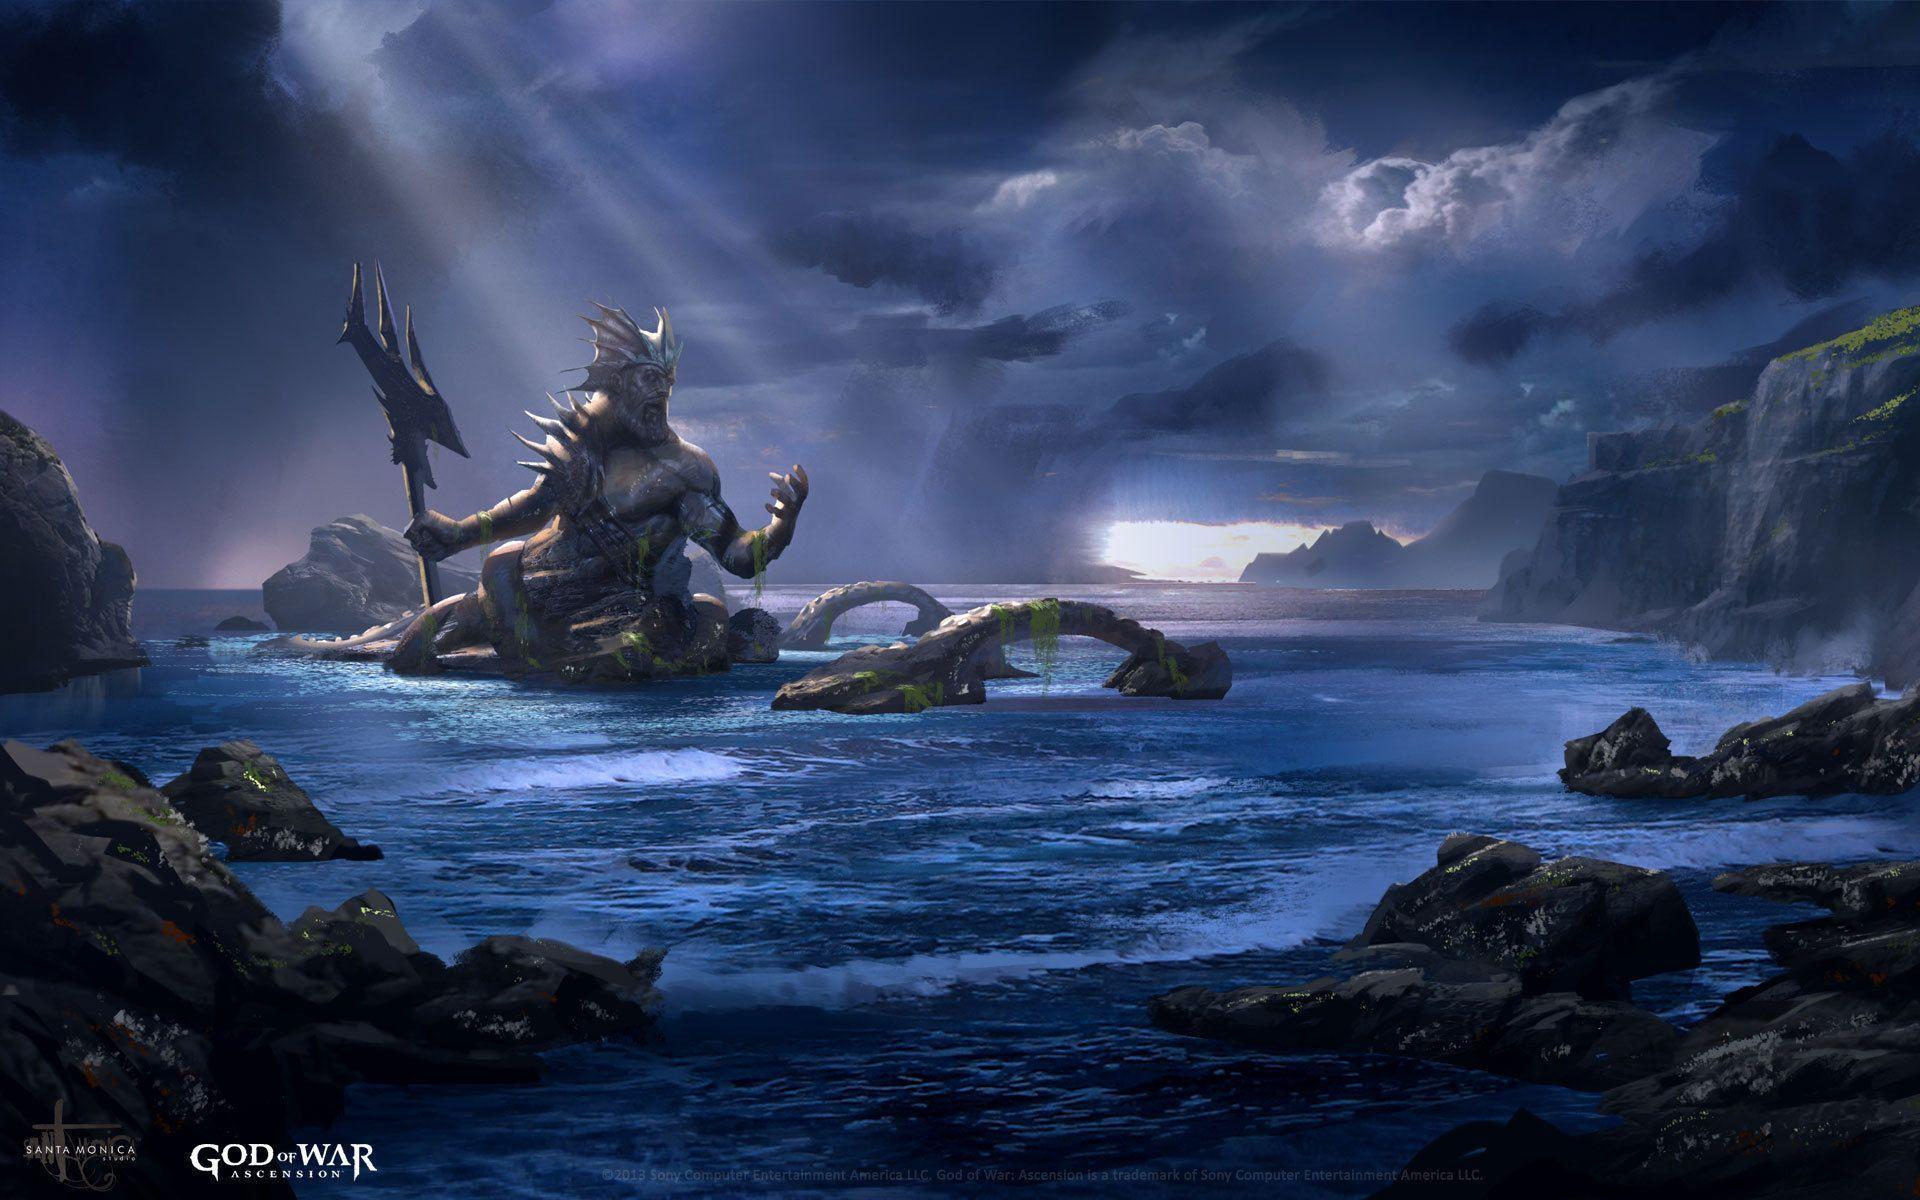 God of War: Ascension: sea monster wallpaper and image